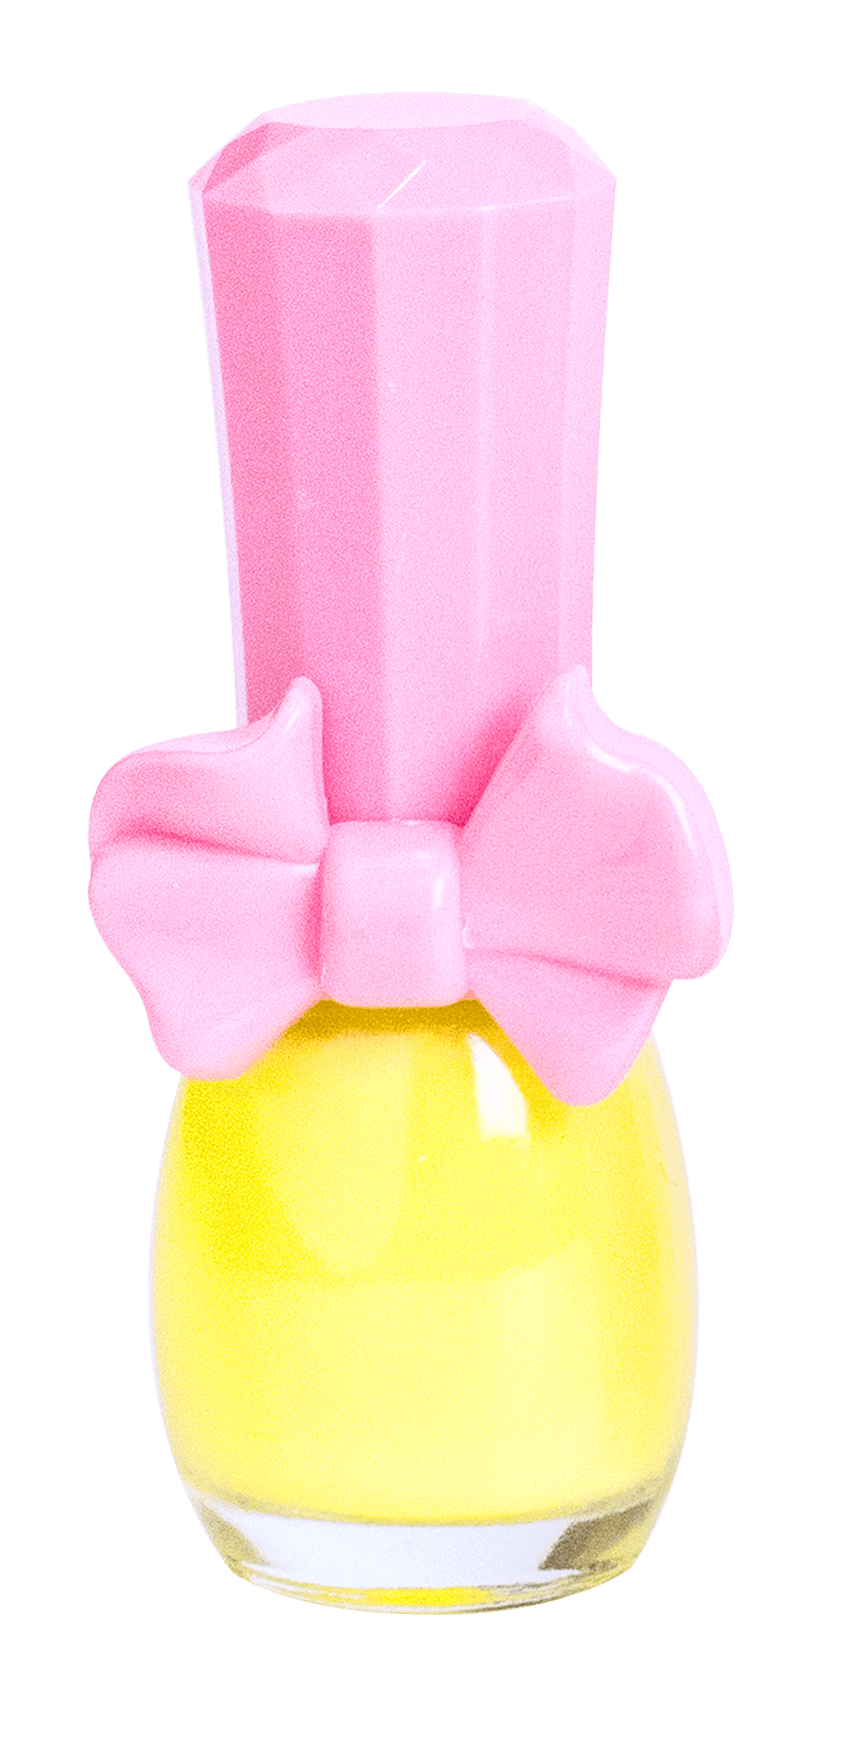 Pinky Cosmetic I'm Pinky Kids Nail Paint Fresh Lemon - Çocuklar İçin Soyulabilir Oje